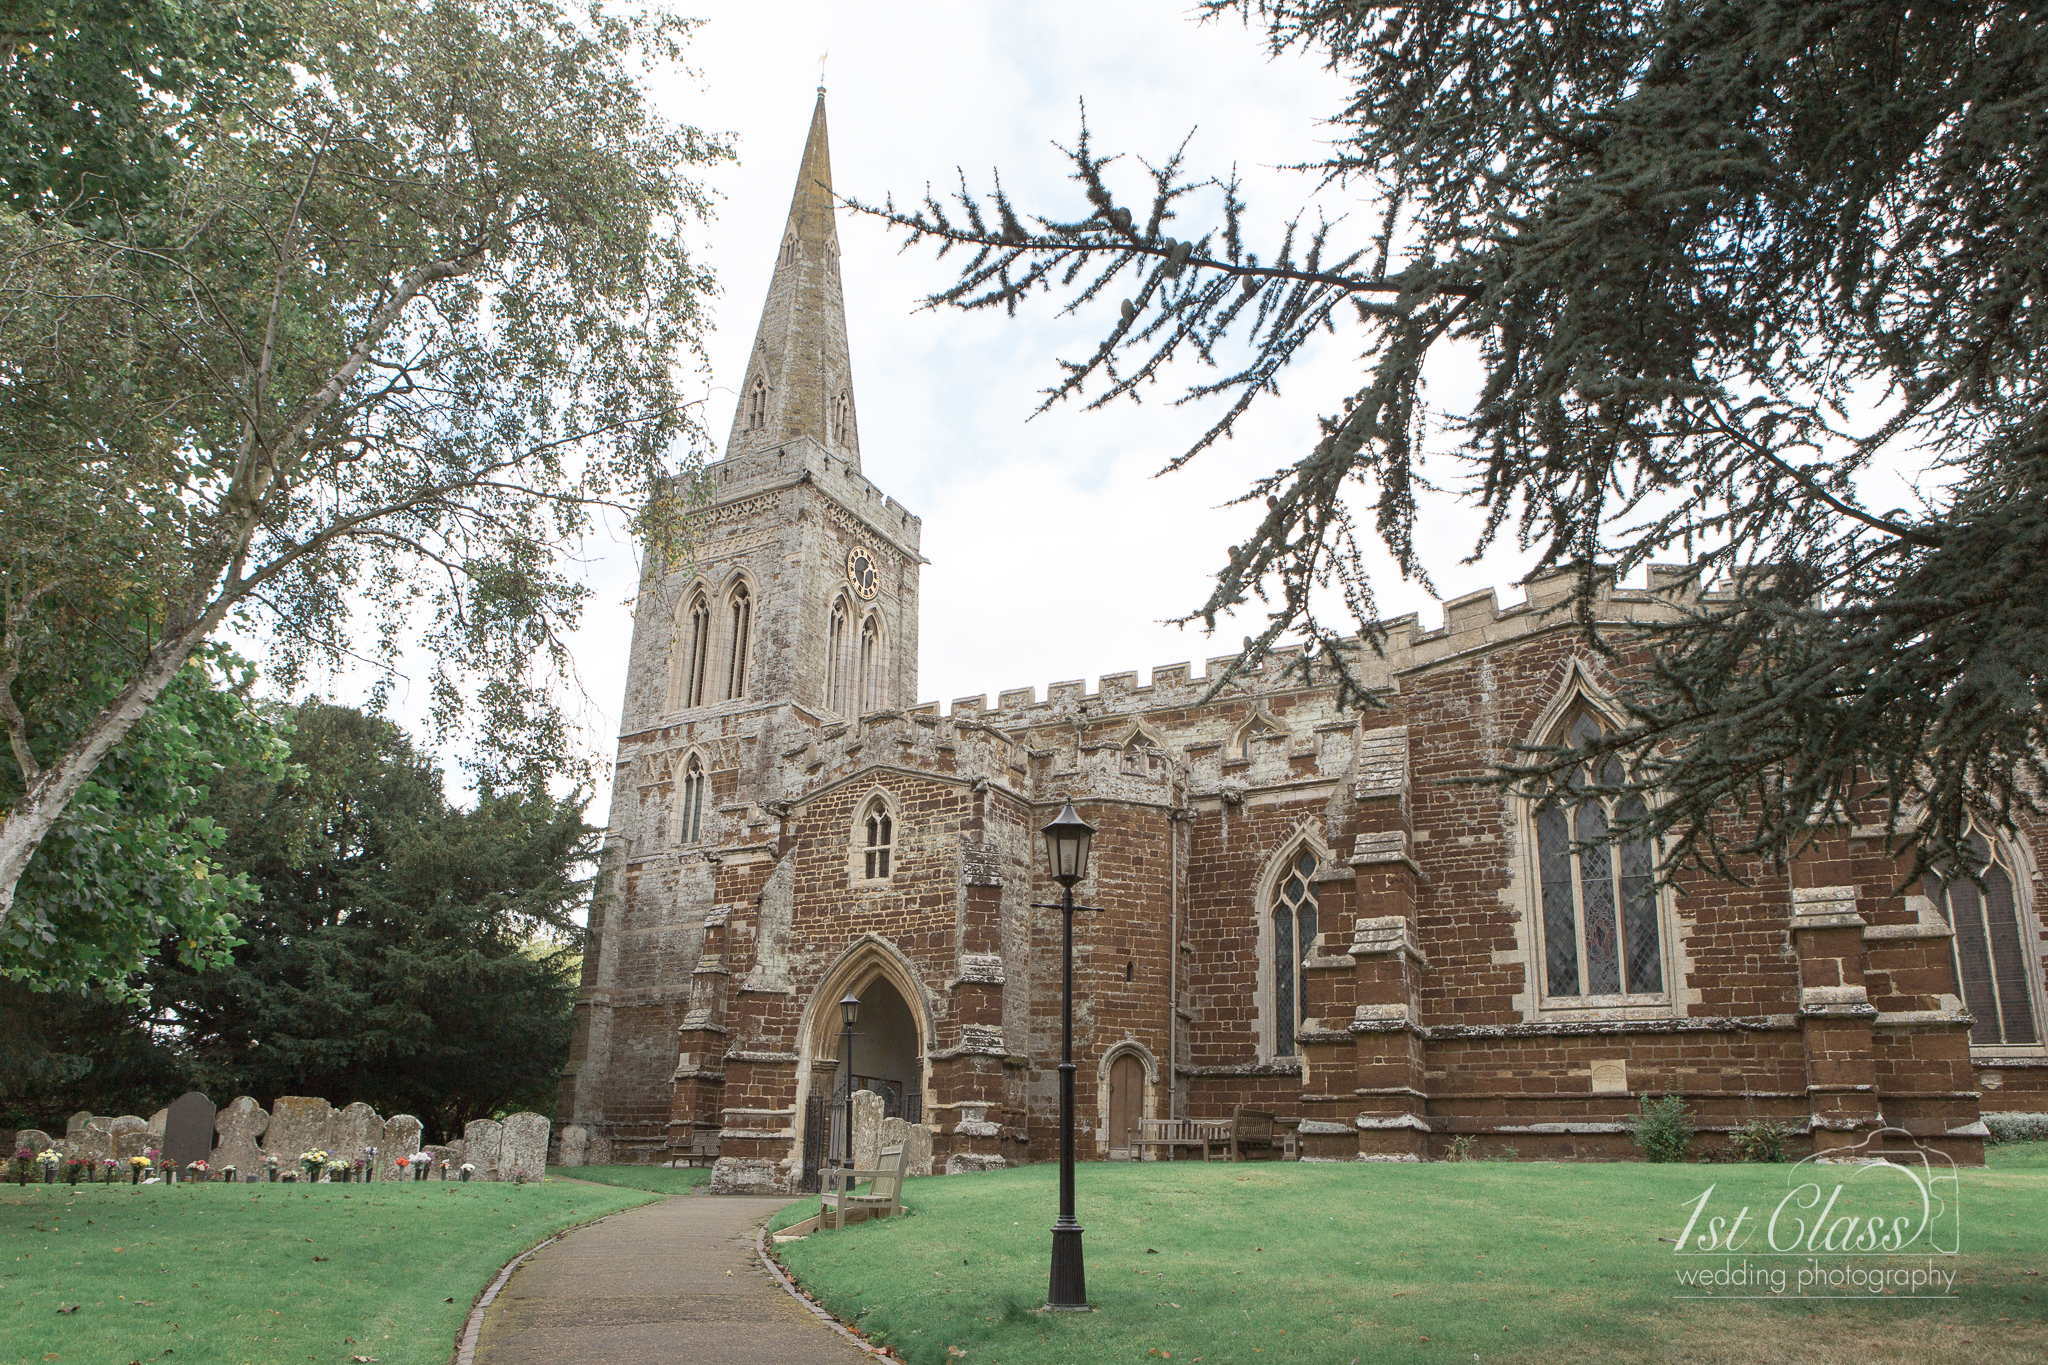 st Mary's church fined on wedding photograper